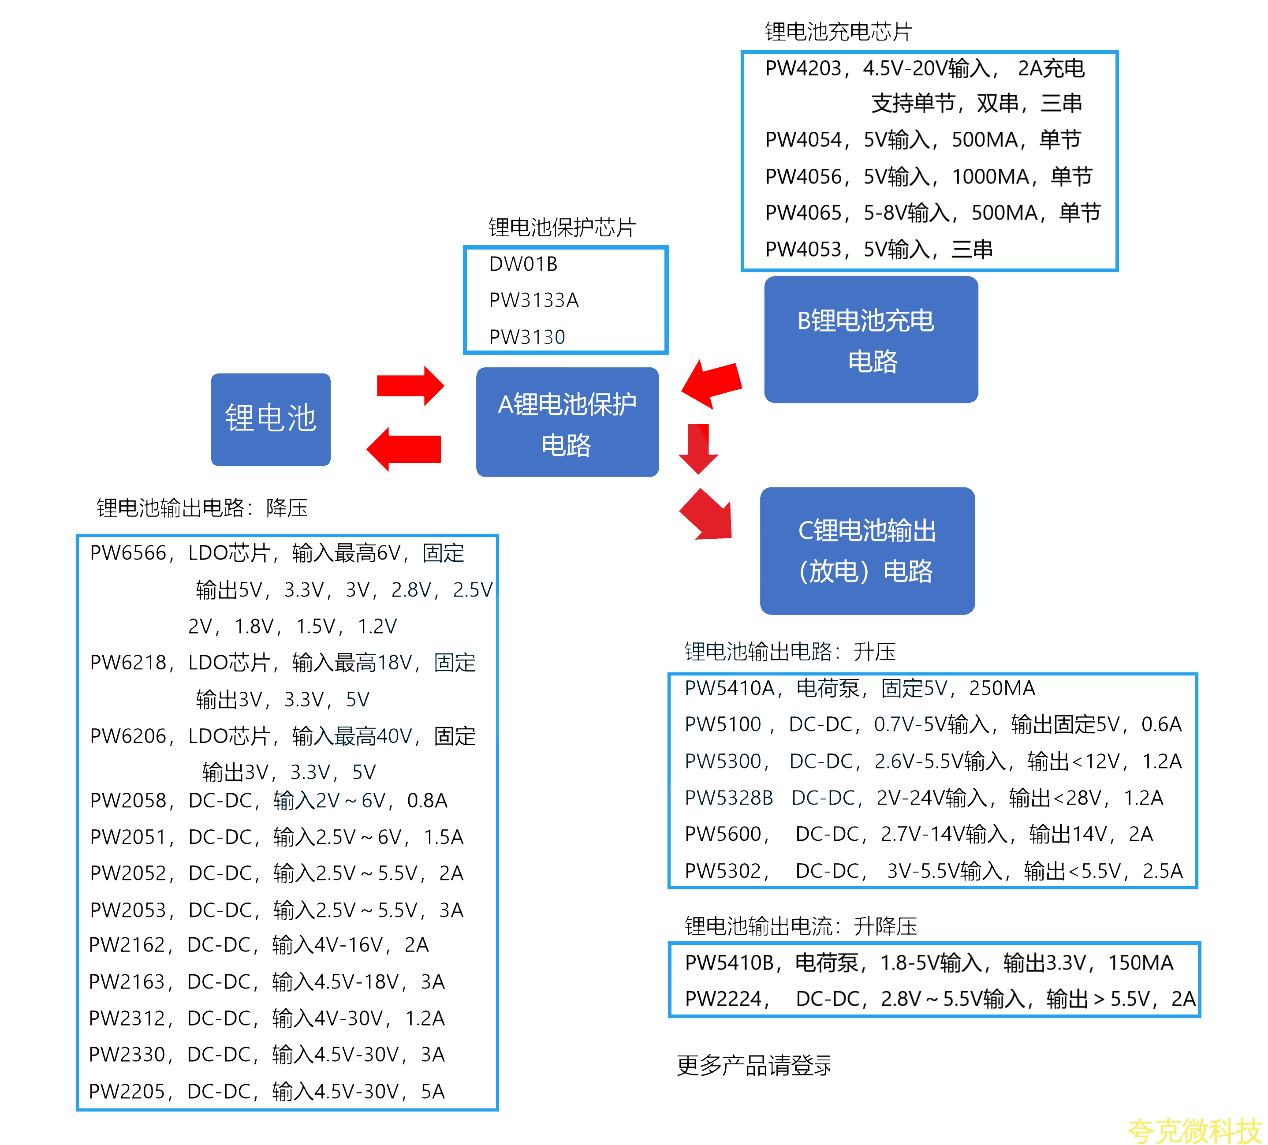 DW01KA最新中文資料和完美電路圖